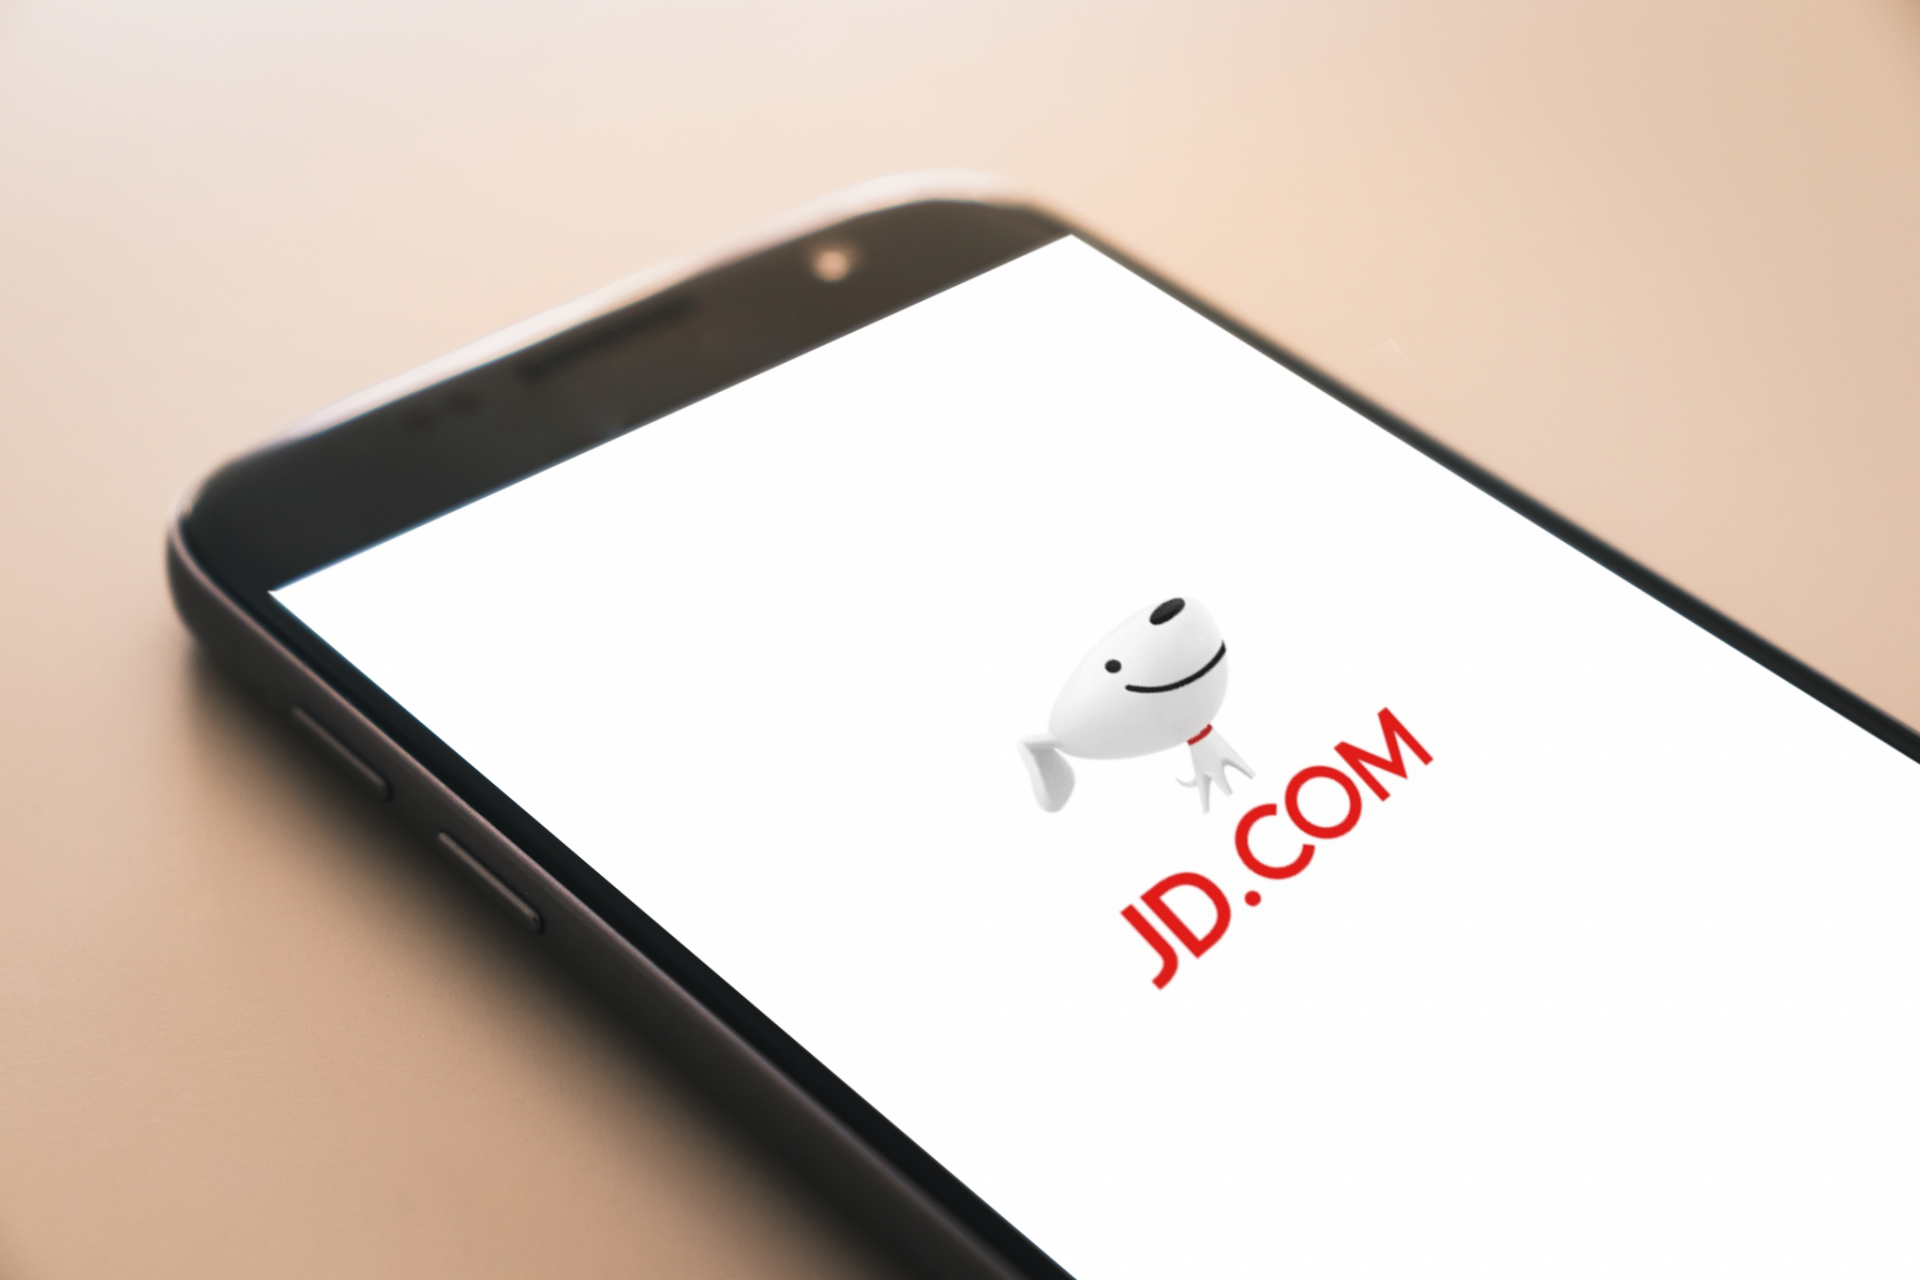 jd.com-logo-pic.png